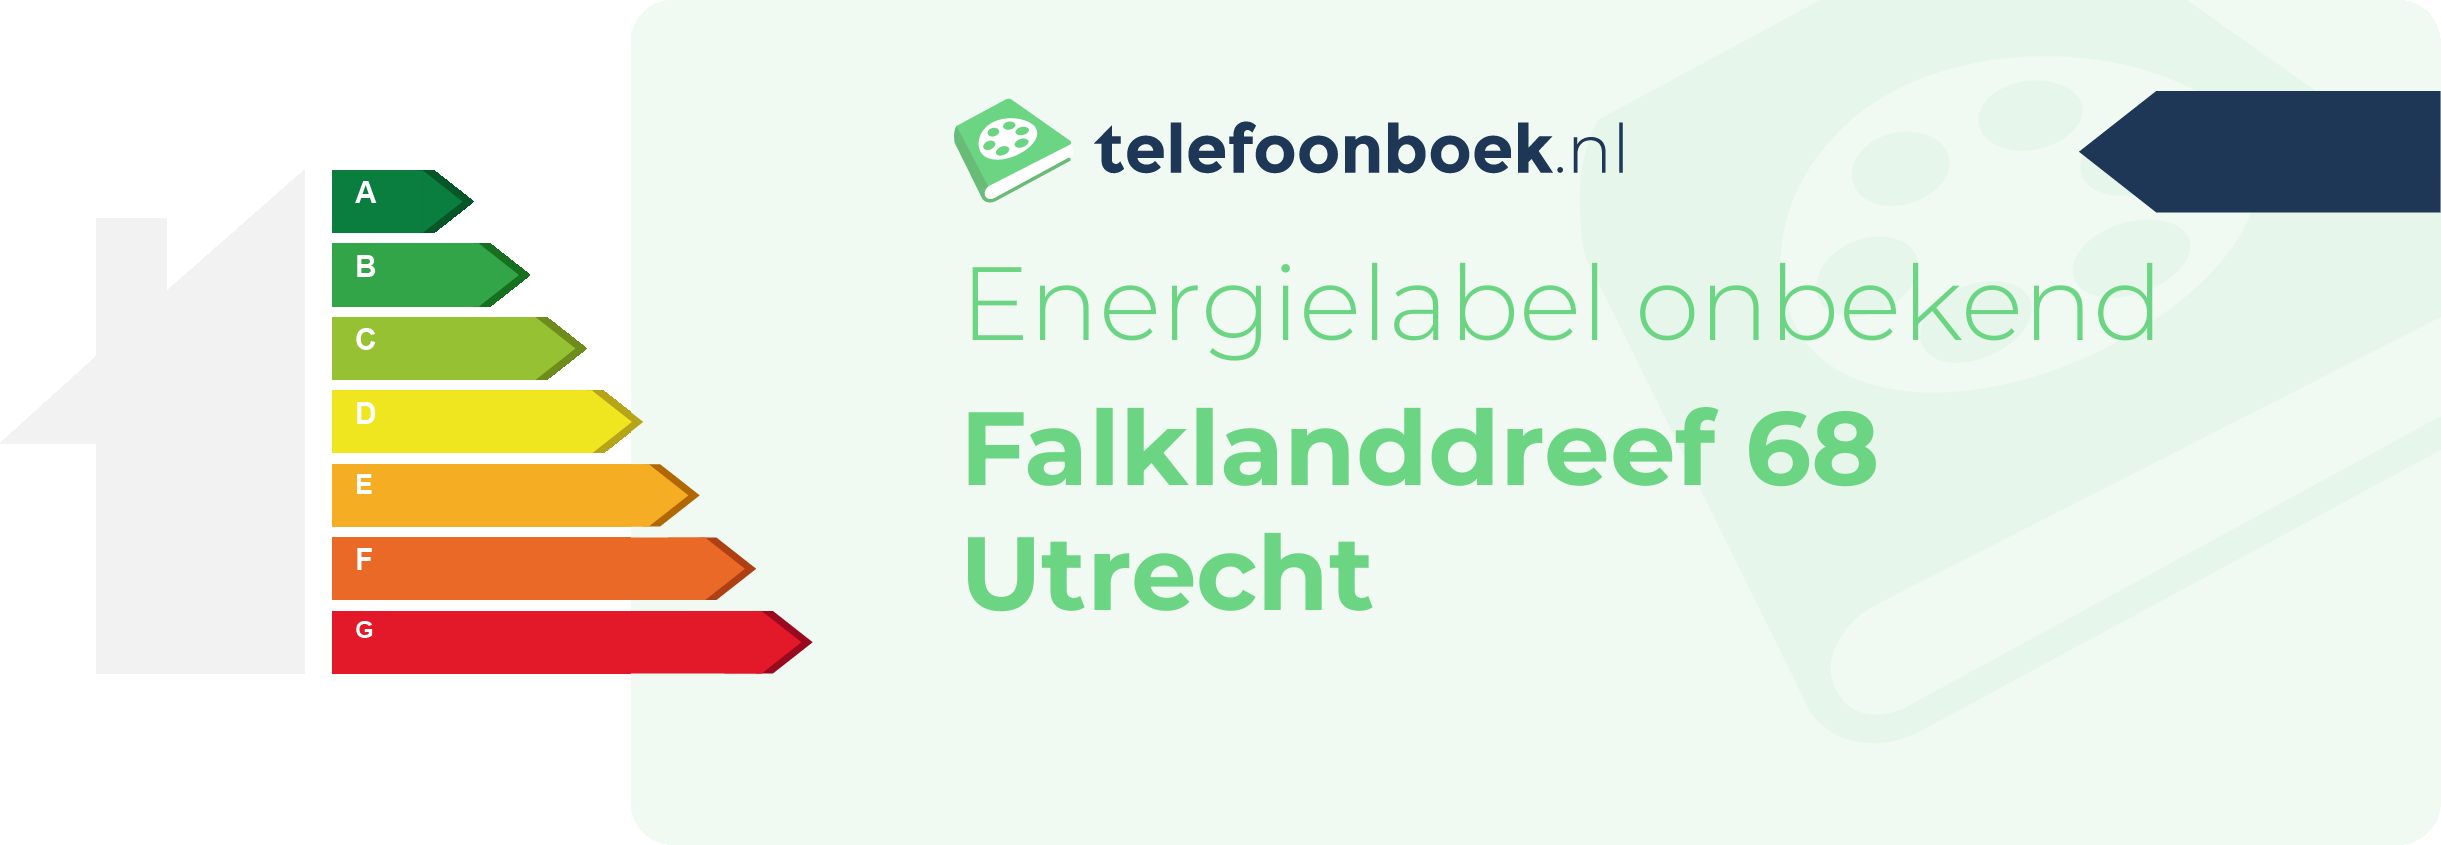 Energielabel Falklanddreef 68 Utrecht